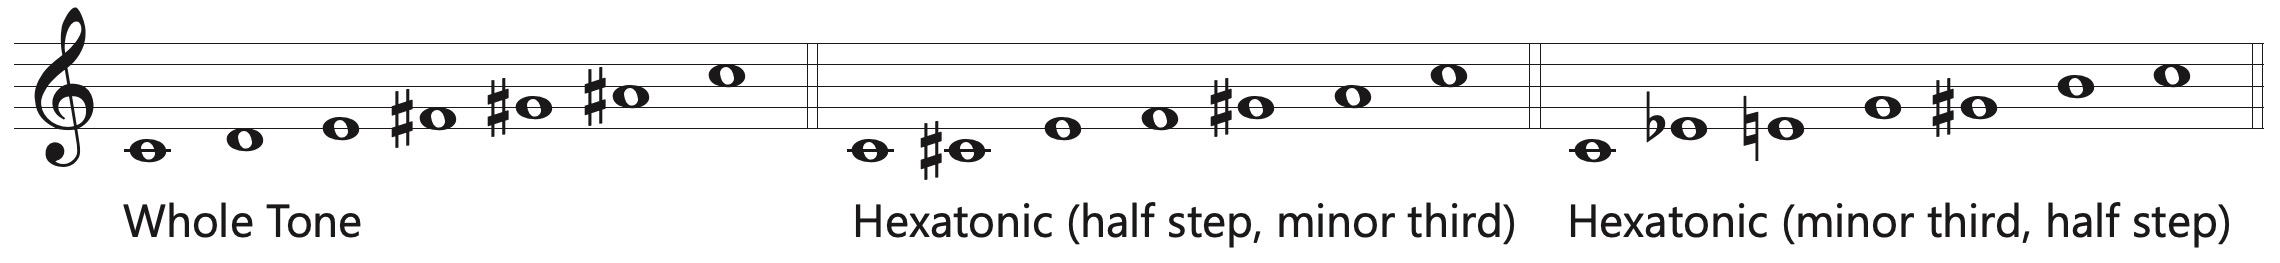 six tone scales